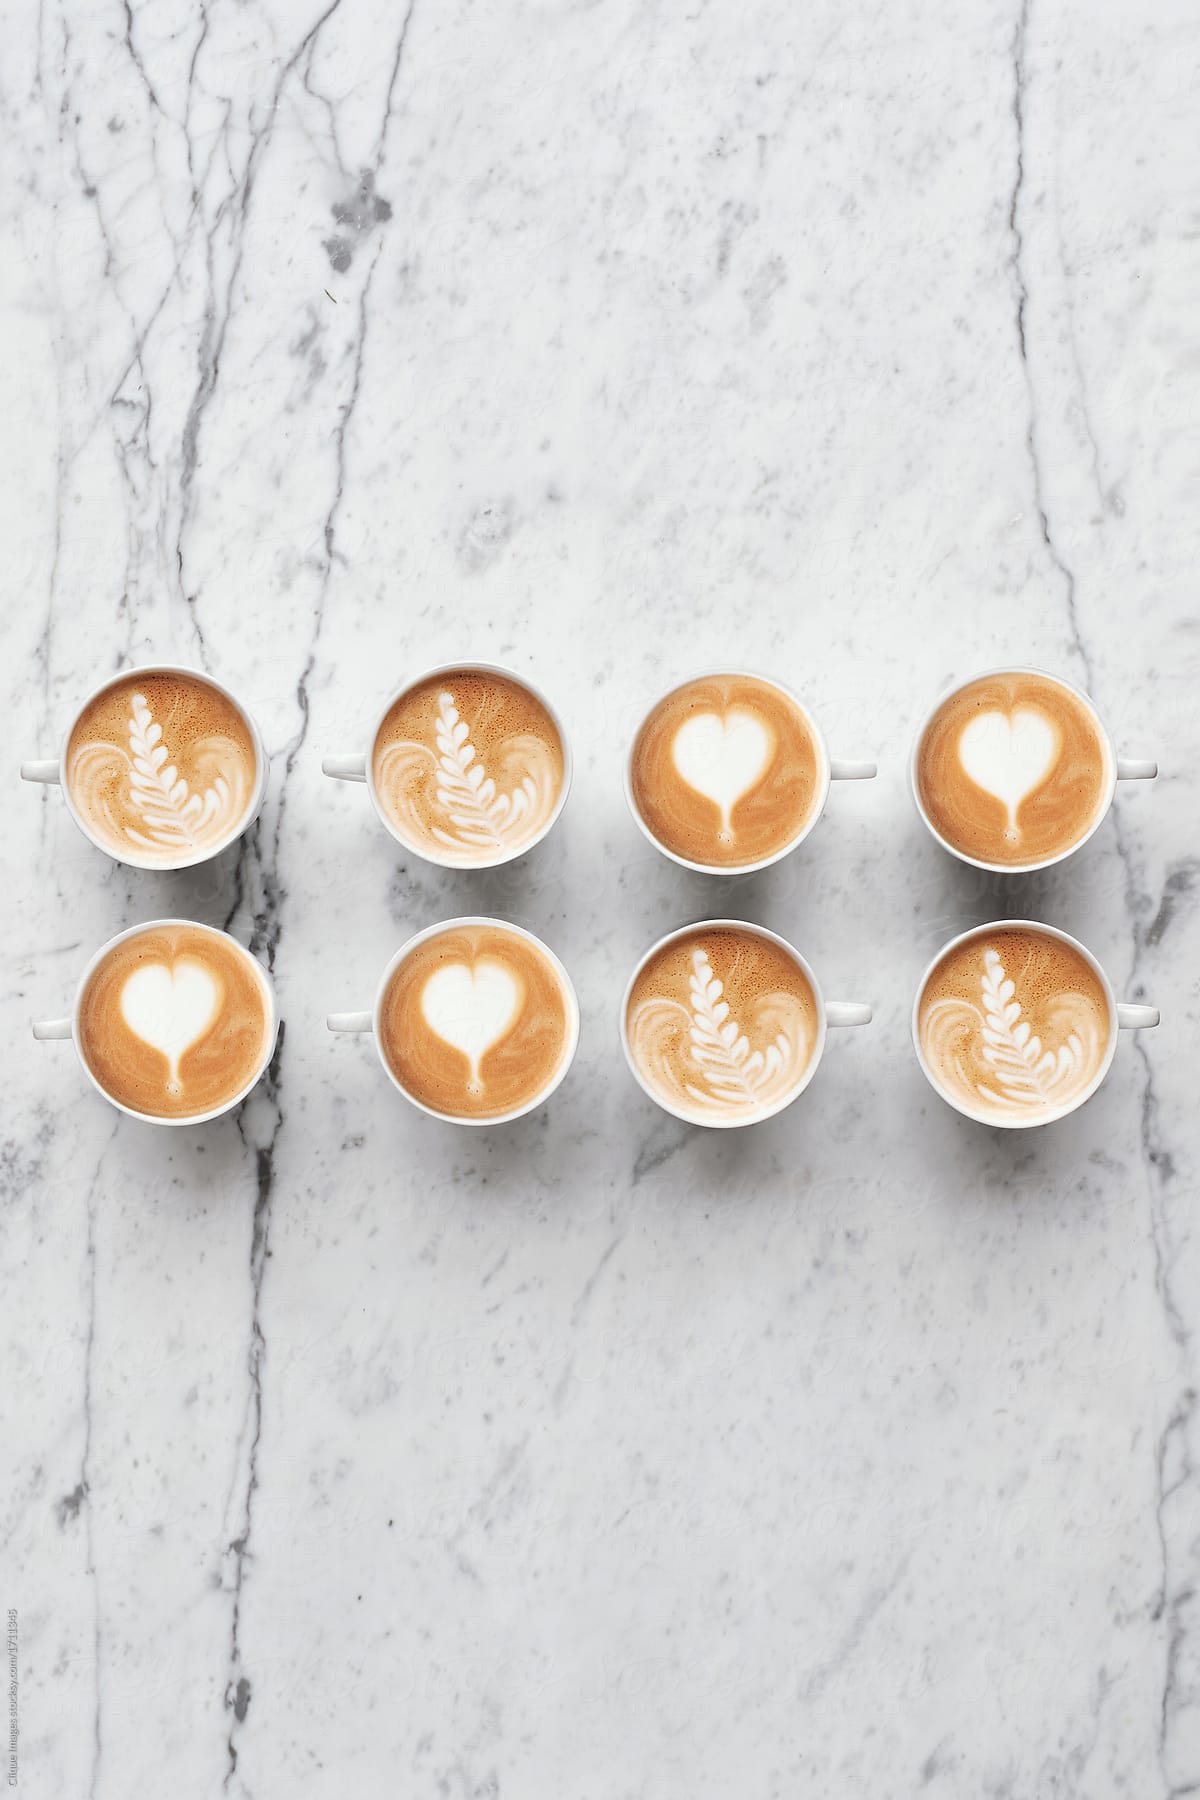 Wonderful latte art